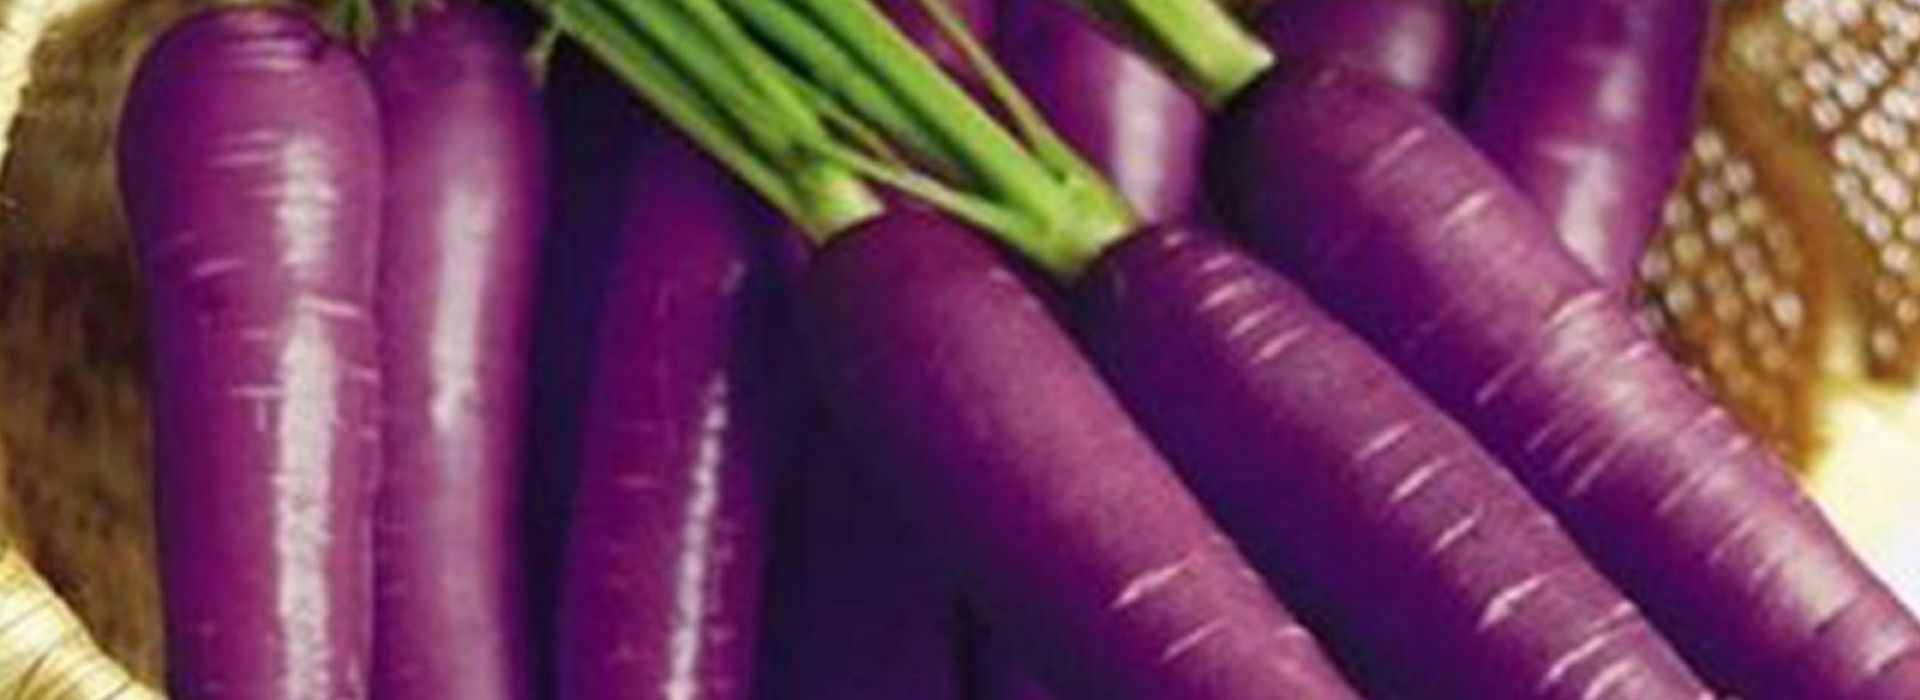 Carrots Purple